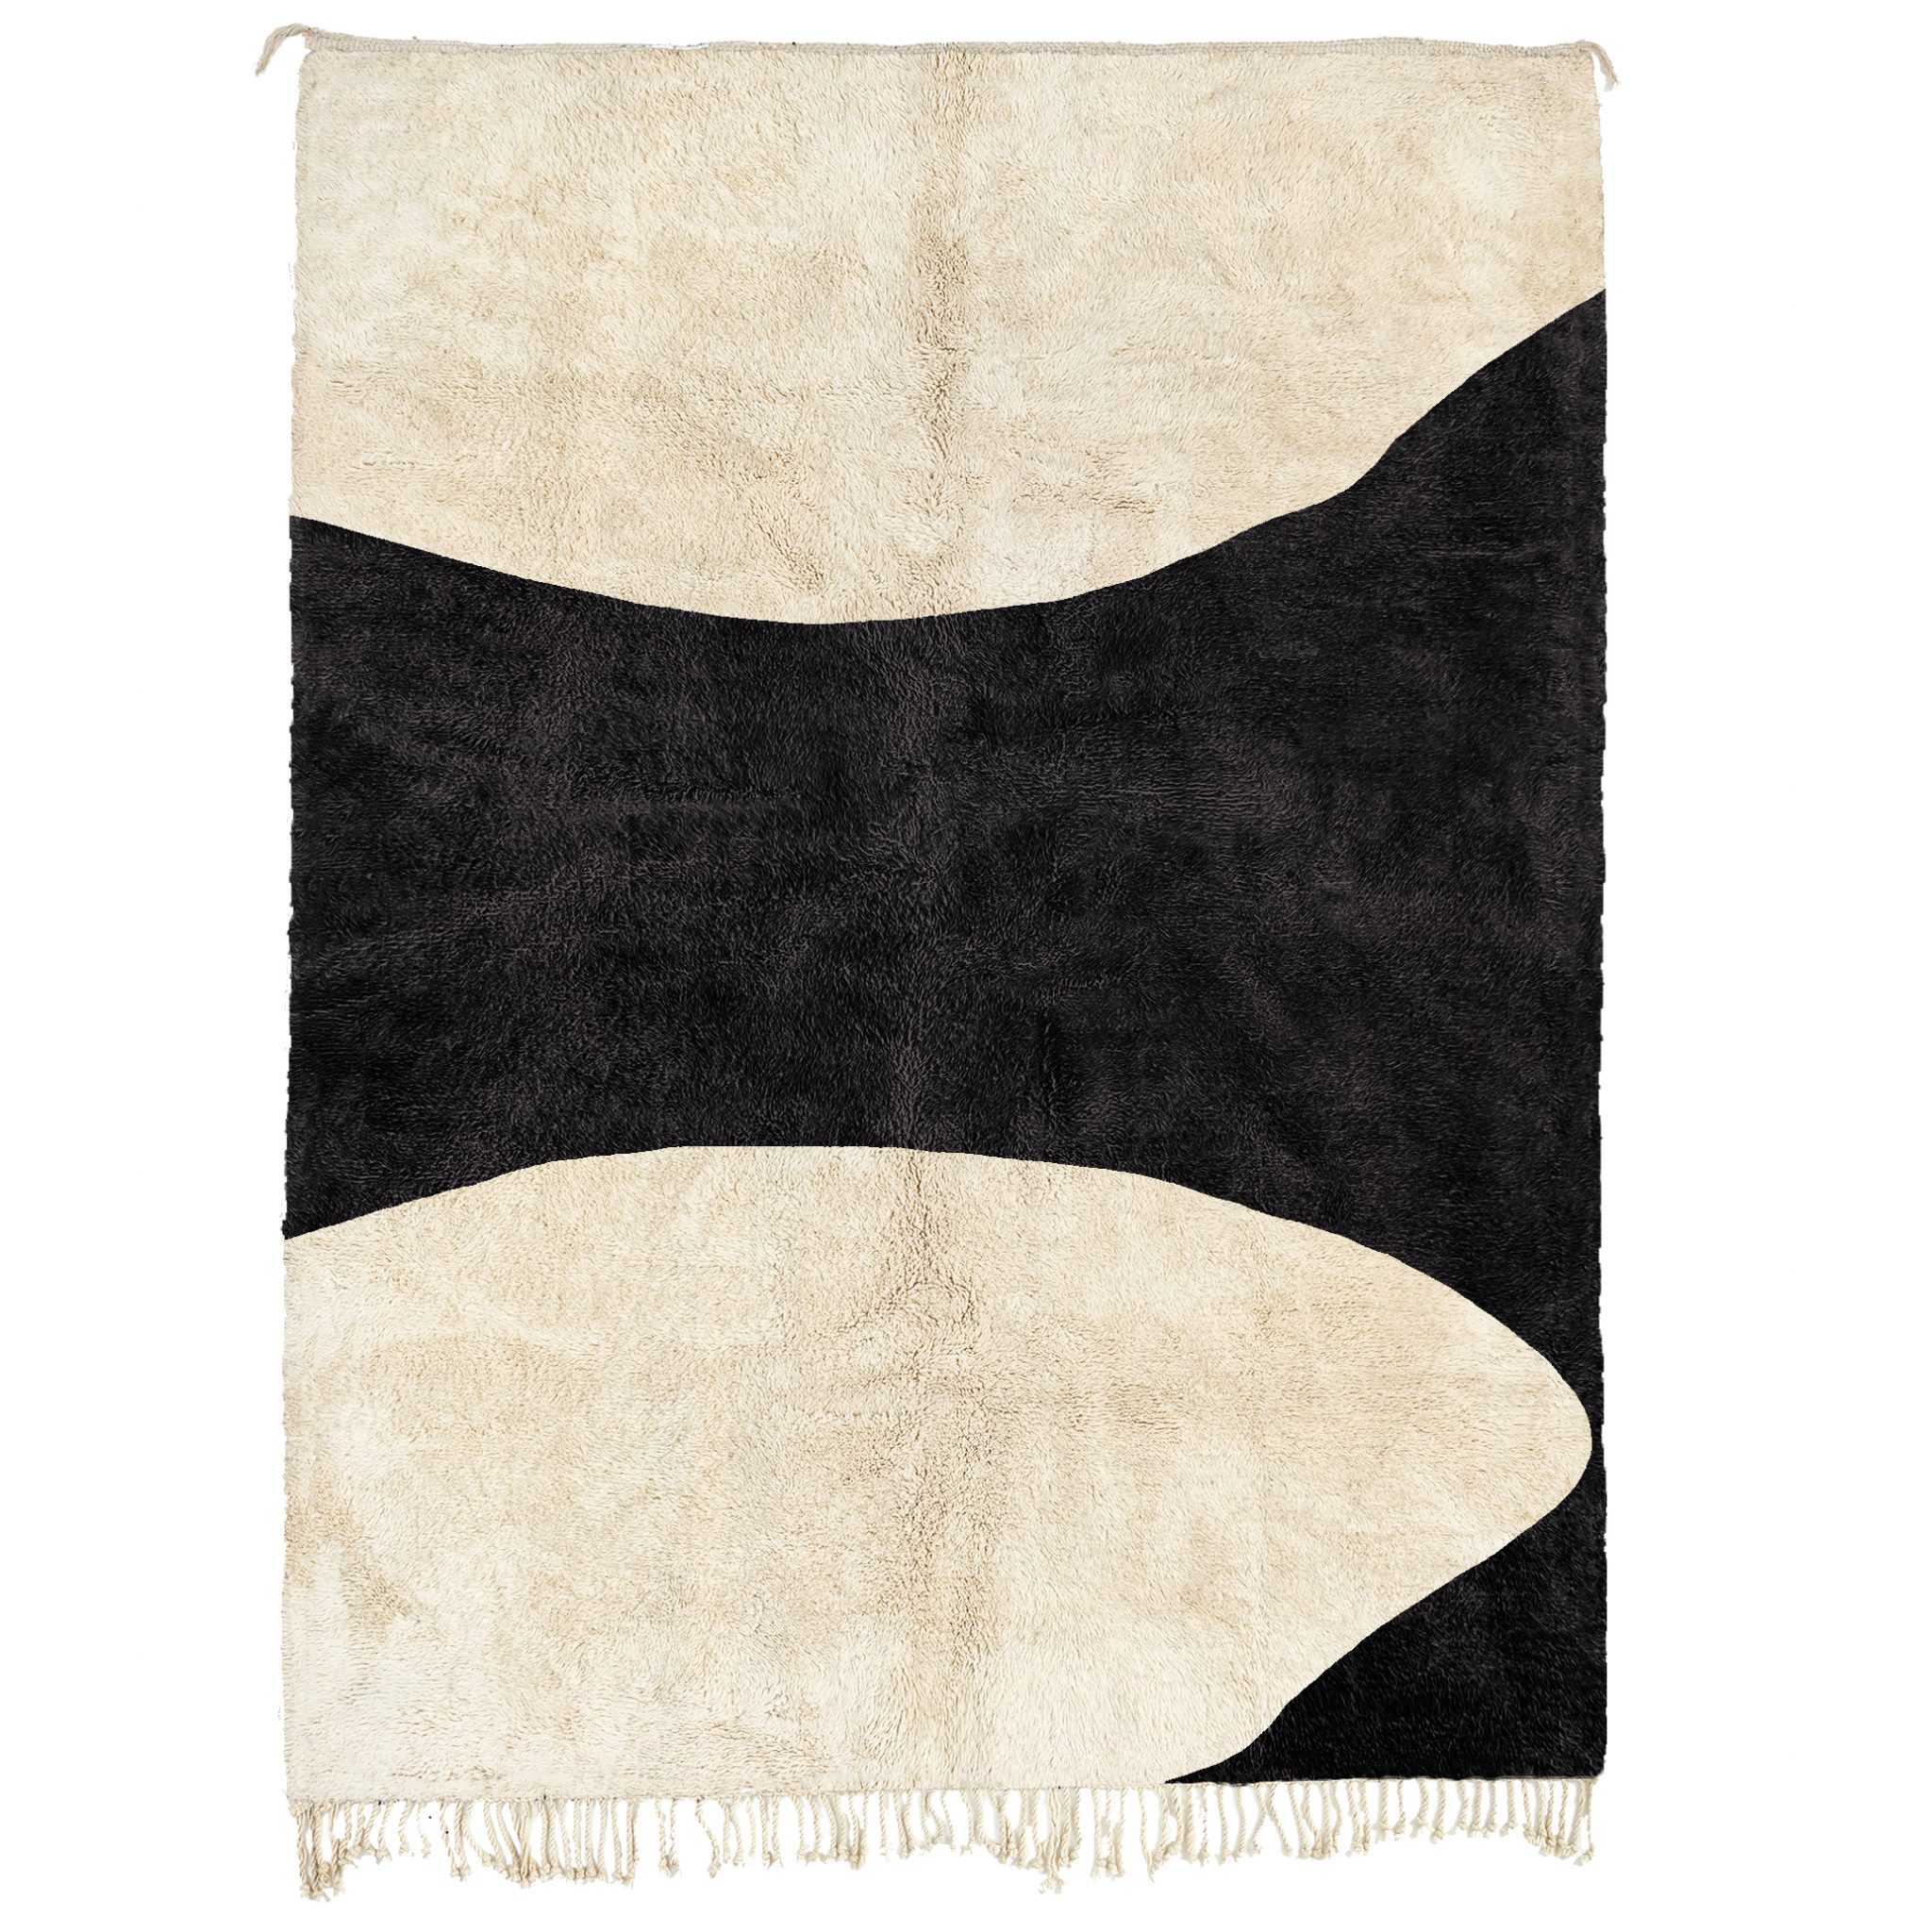 https://moroccan-carpet.com/shop/berber-rug/white-modern-moroccan-rug-contemporary-art-110/